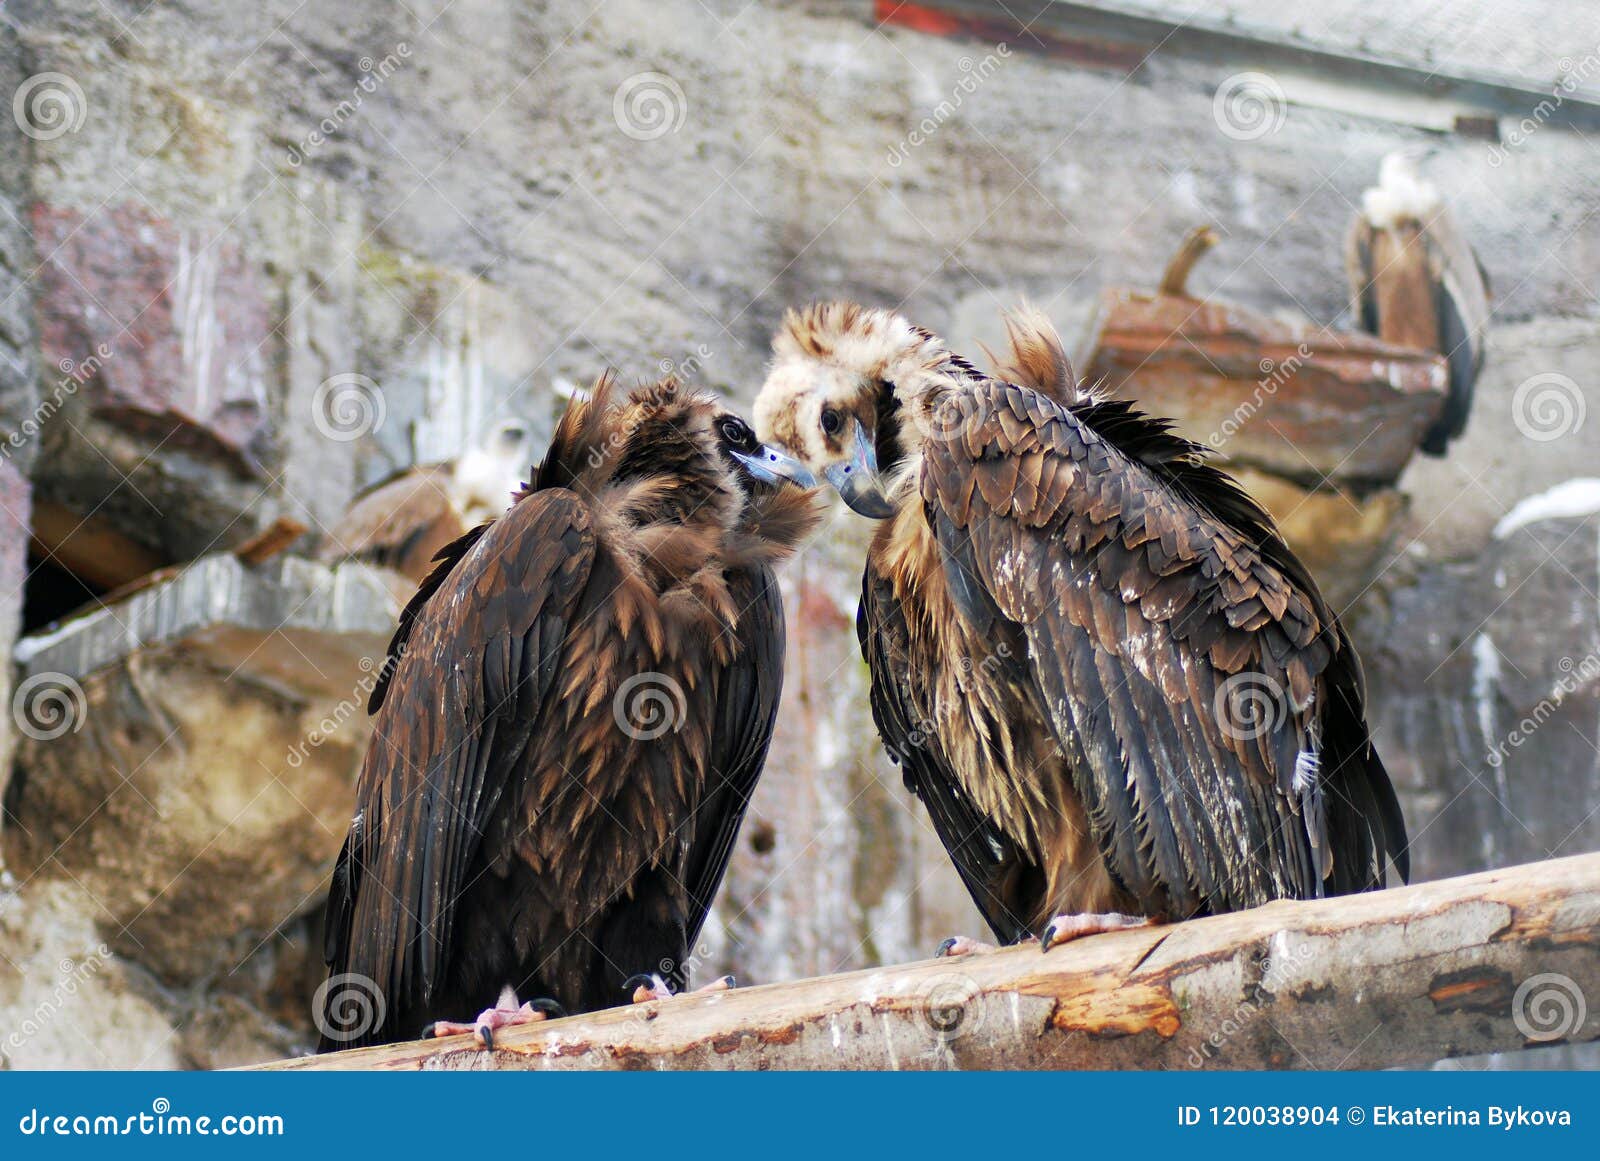 Griffon Vulture Birds Portrait Taken in Moscow Zoo. Stock Photo - Image ...